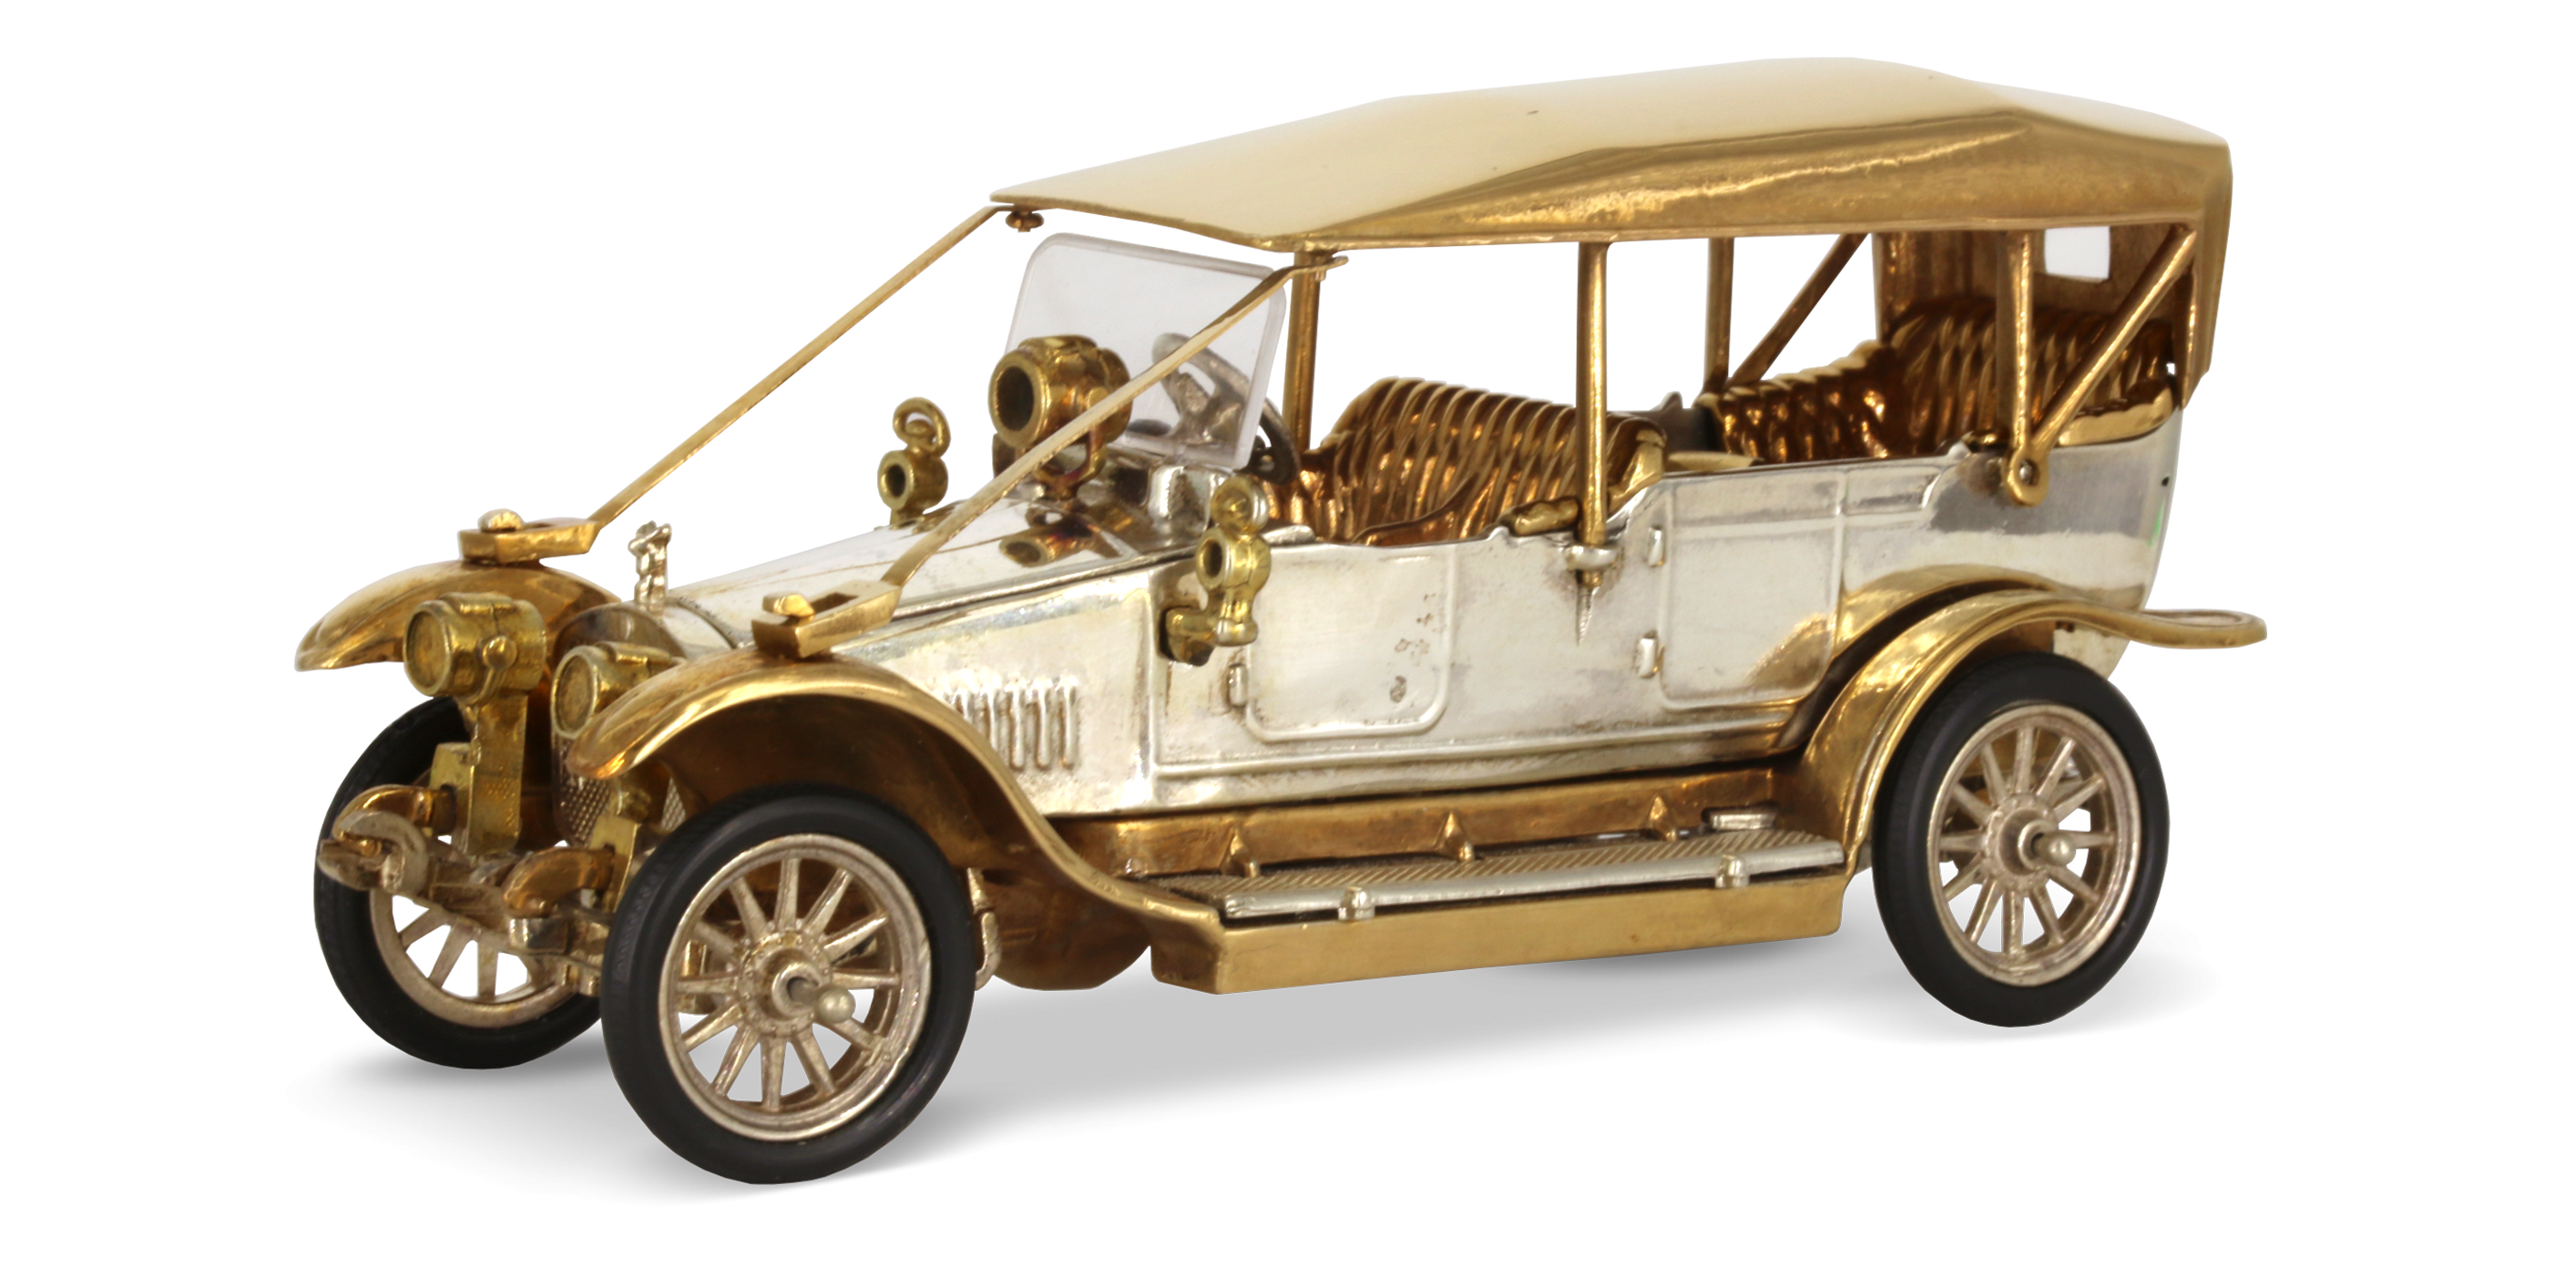 Автомобиль балт. Руссо-Балт 1909. Руссо-Балт с24/40. Руссо-Балт с-24, 1909. Автомобиль Руссо-Балт модель.